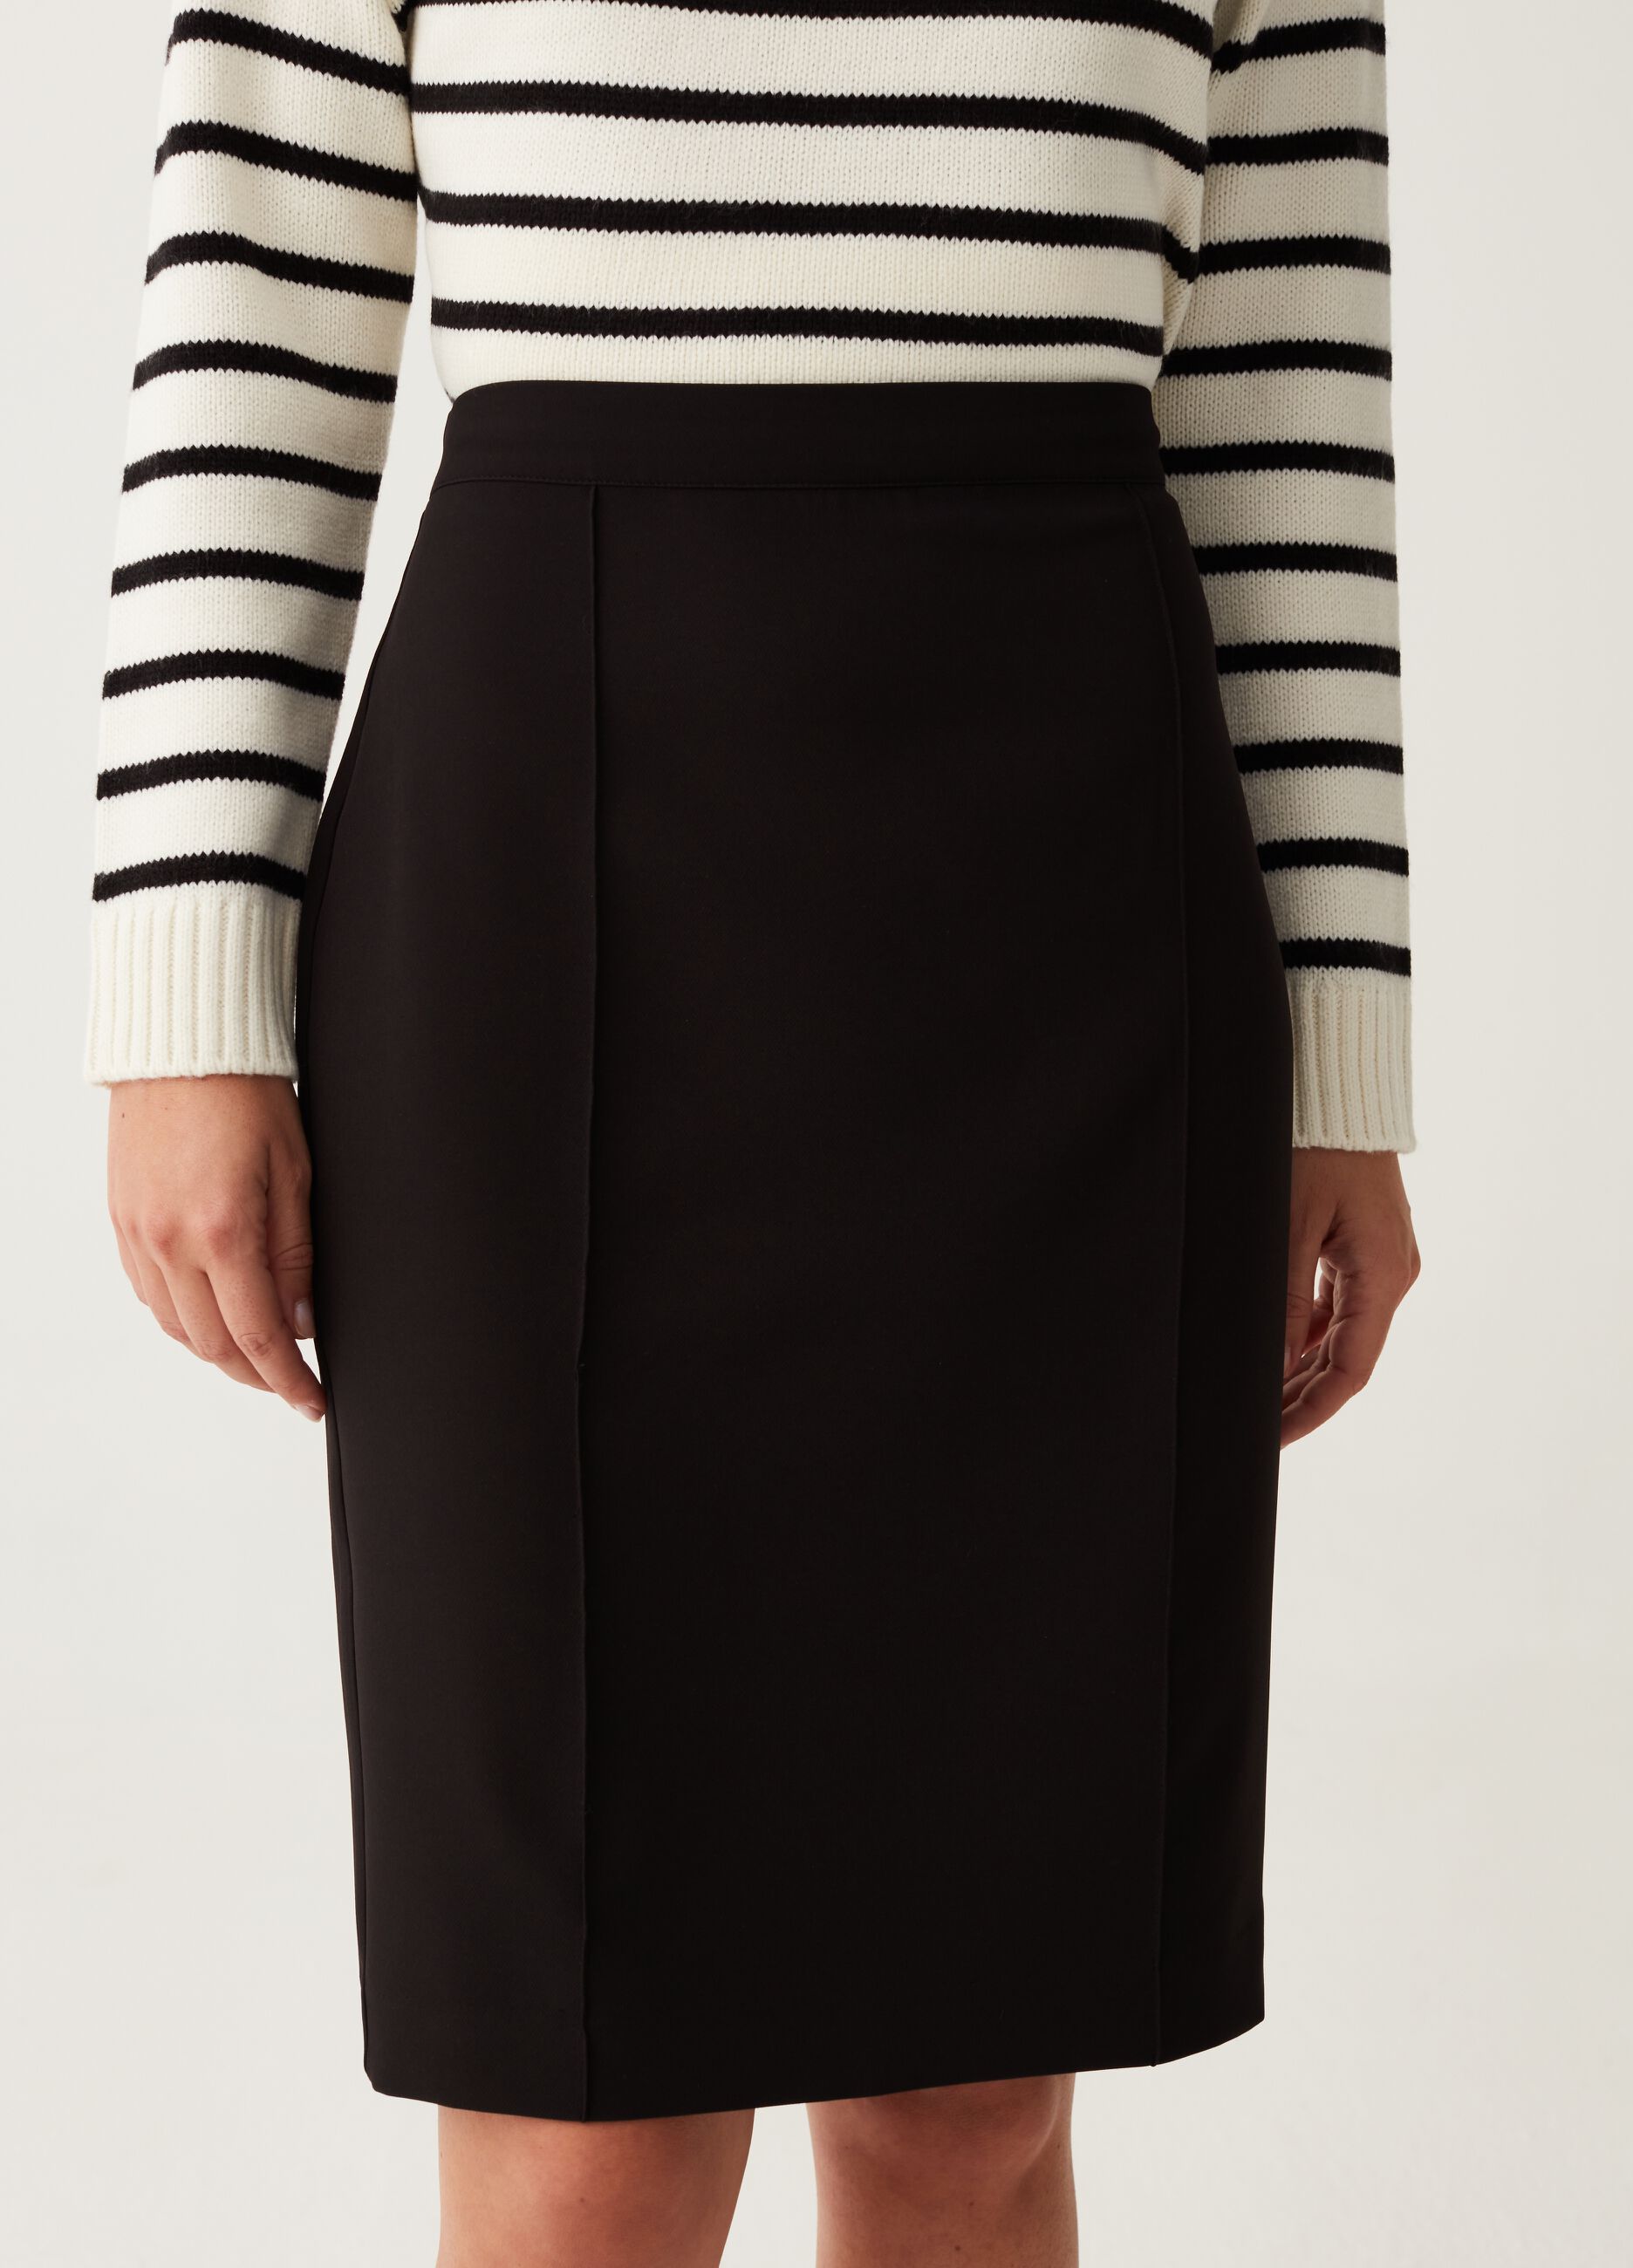 Midi pencil skirt with raised stitching